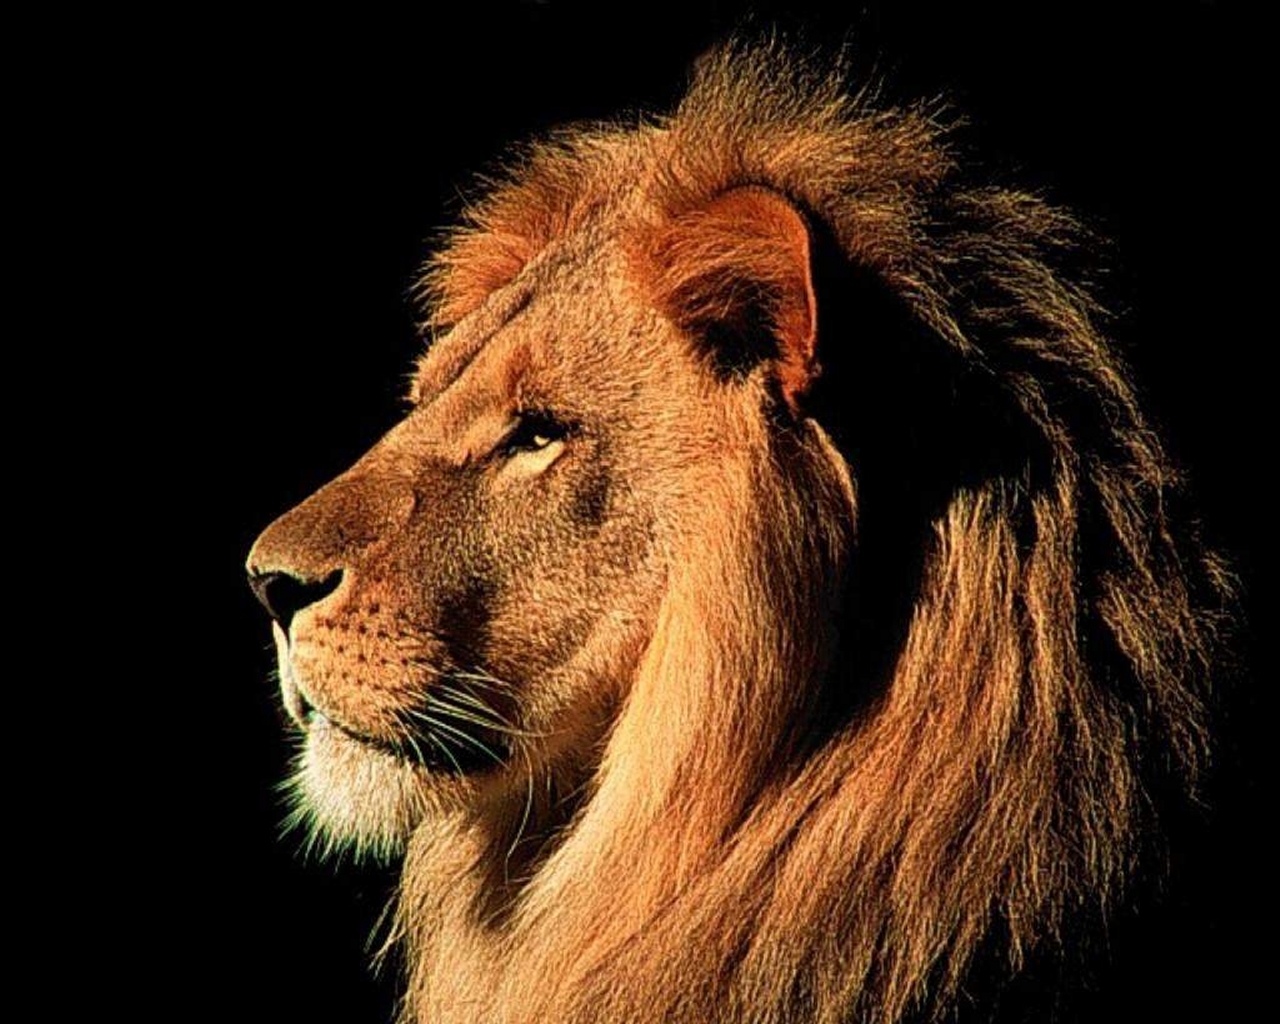 Lions Wallpaper